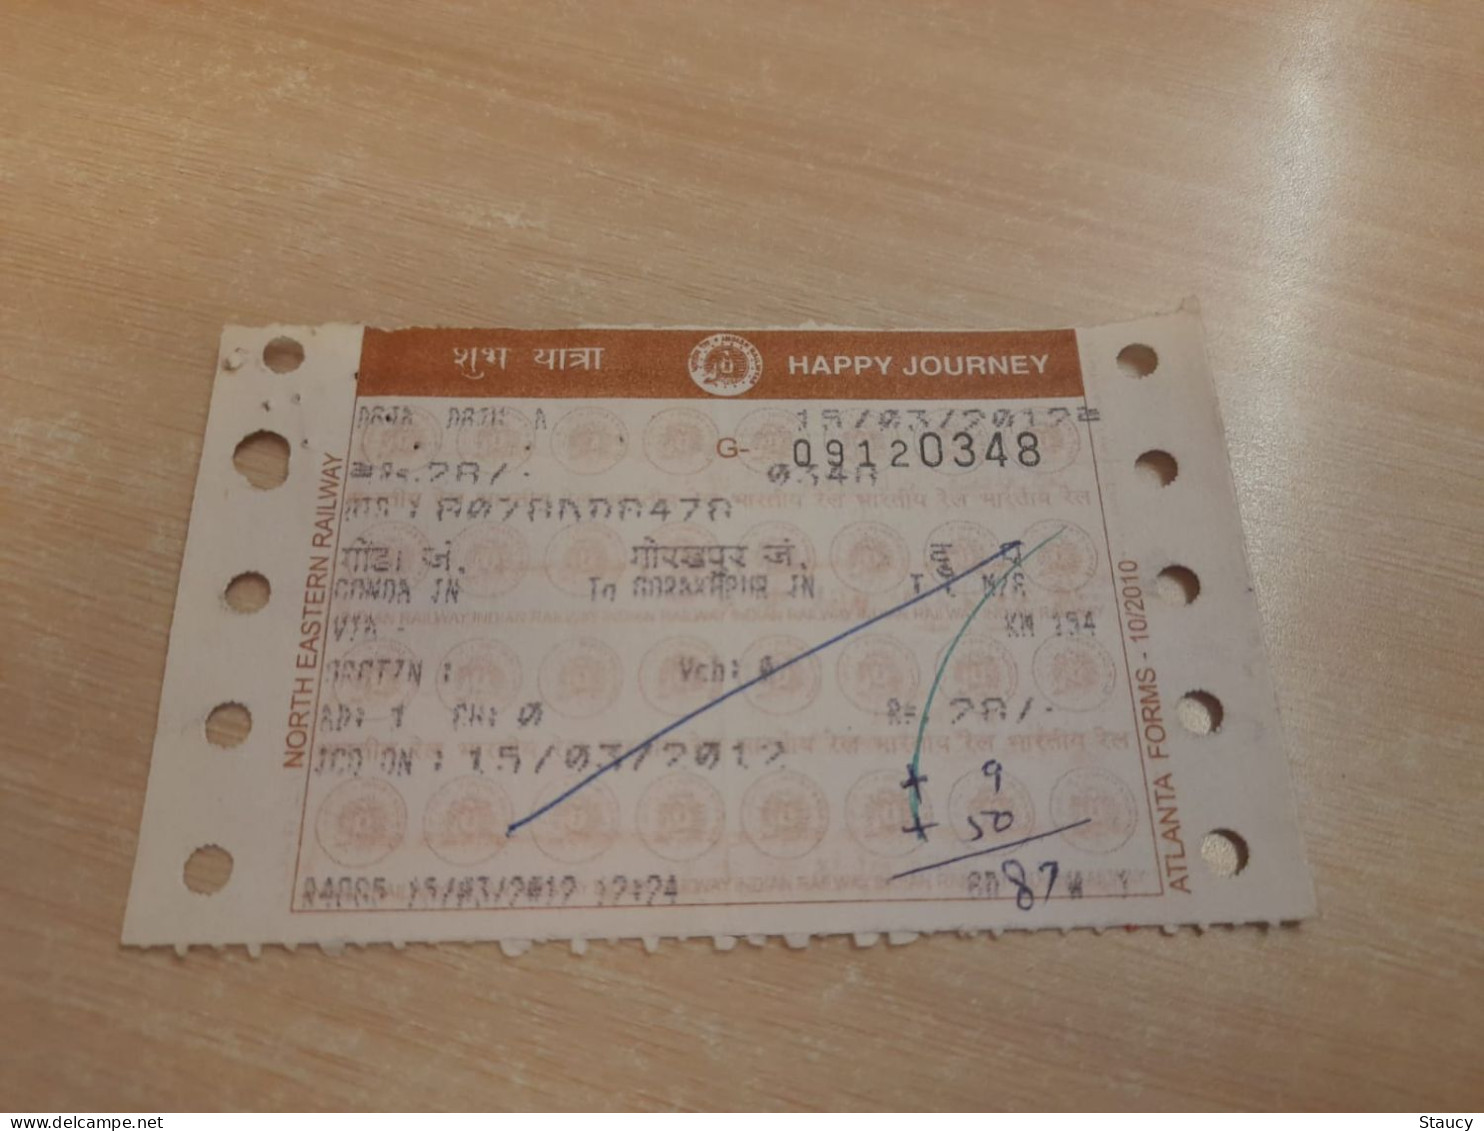 India Old / Vintage - Railway / Train Ticket "NORTH EASTERN RAILWAY" As Per Scan - World